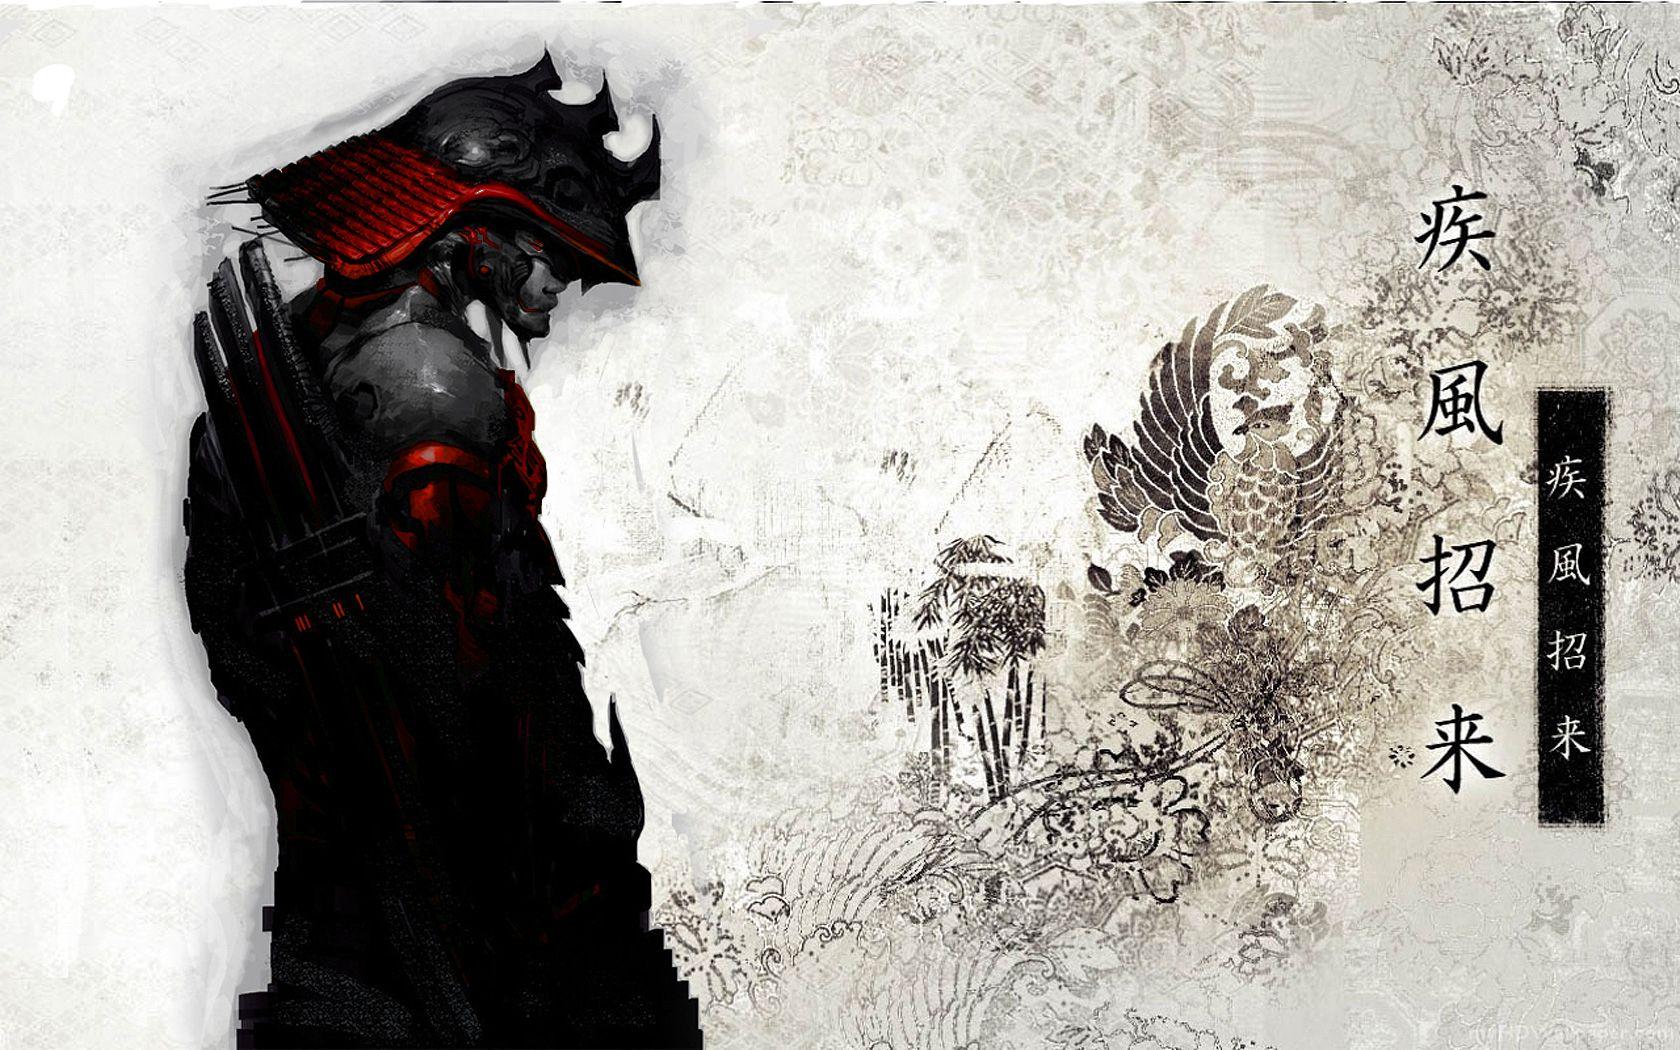 Cool Samurai Wide HD Download wallpaper. creative and fantasy